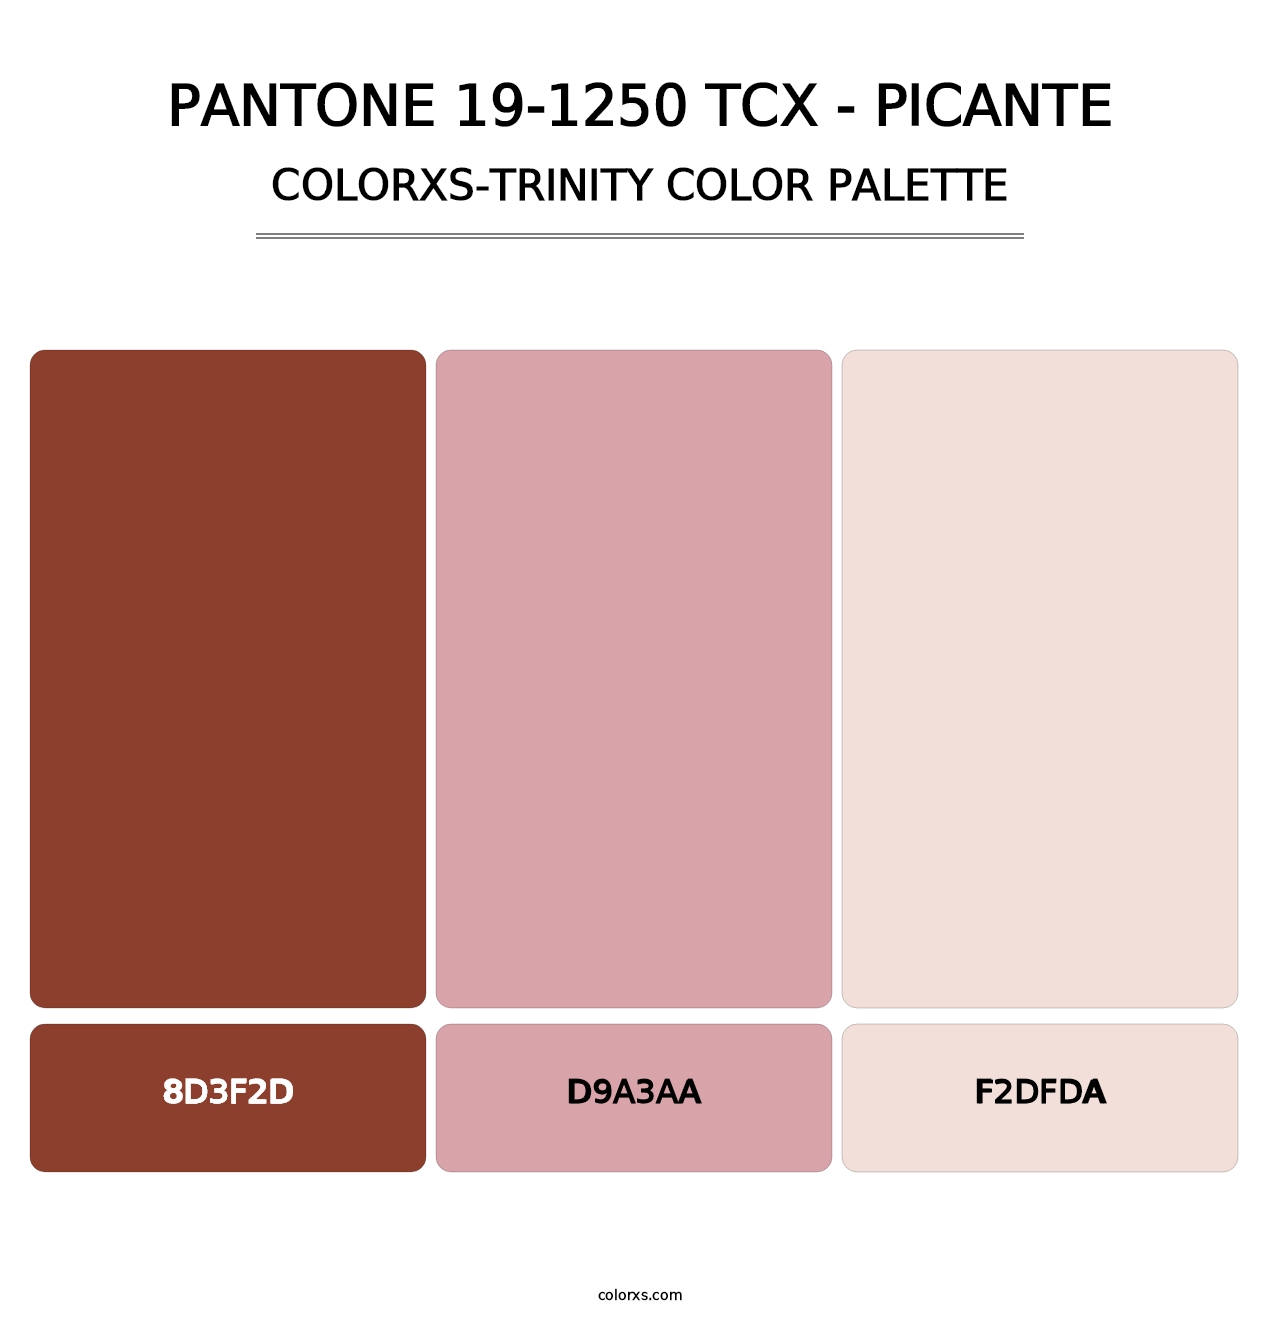 PANTONE 19-1250 TCX - Picante - Colorxs Trinity Palette